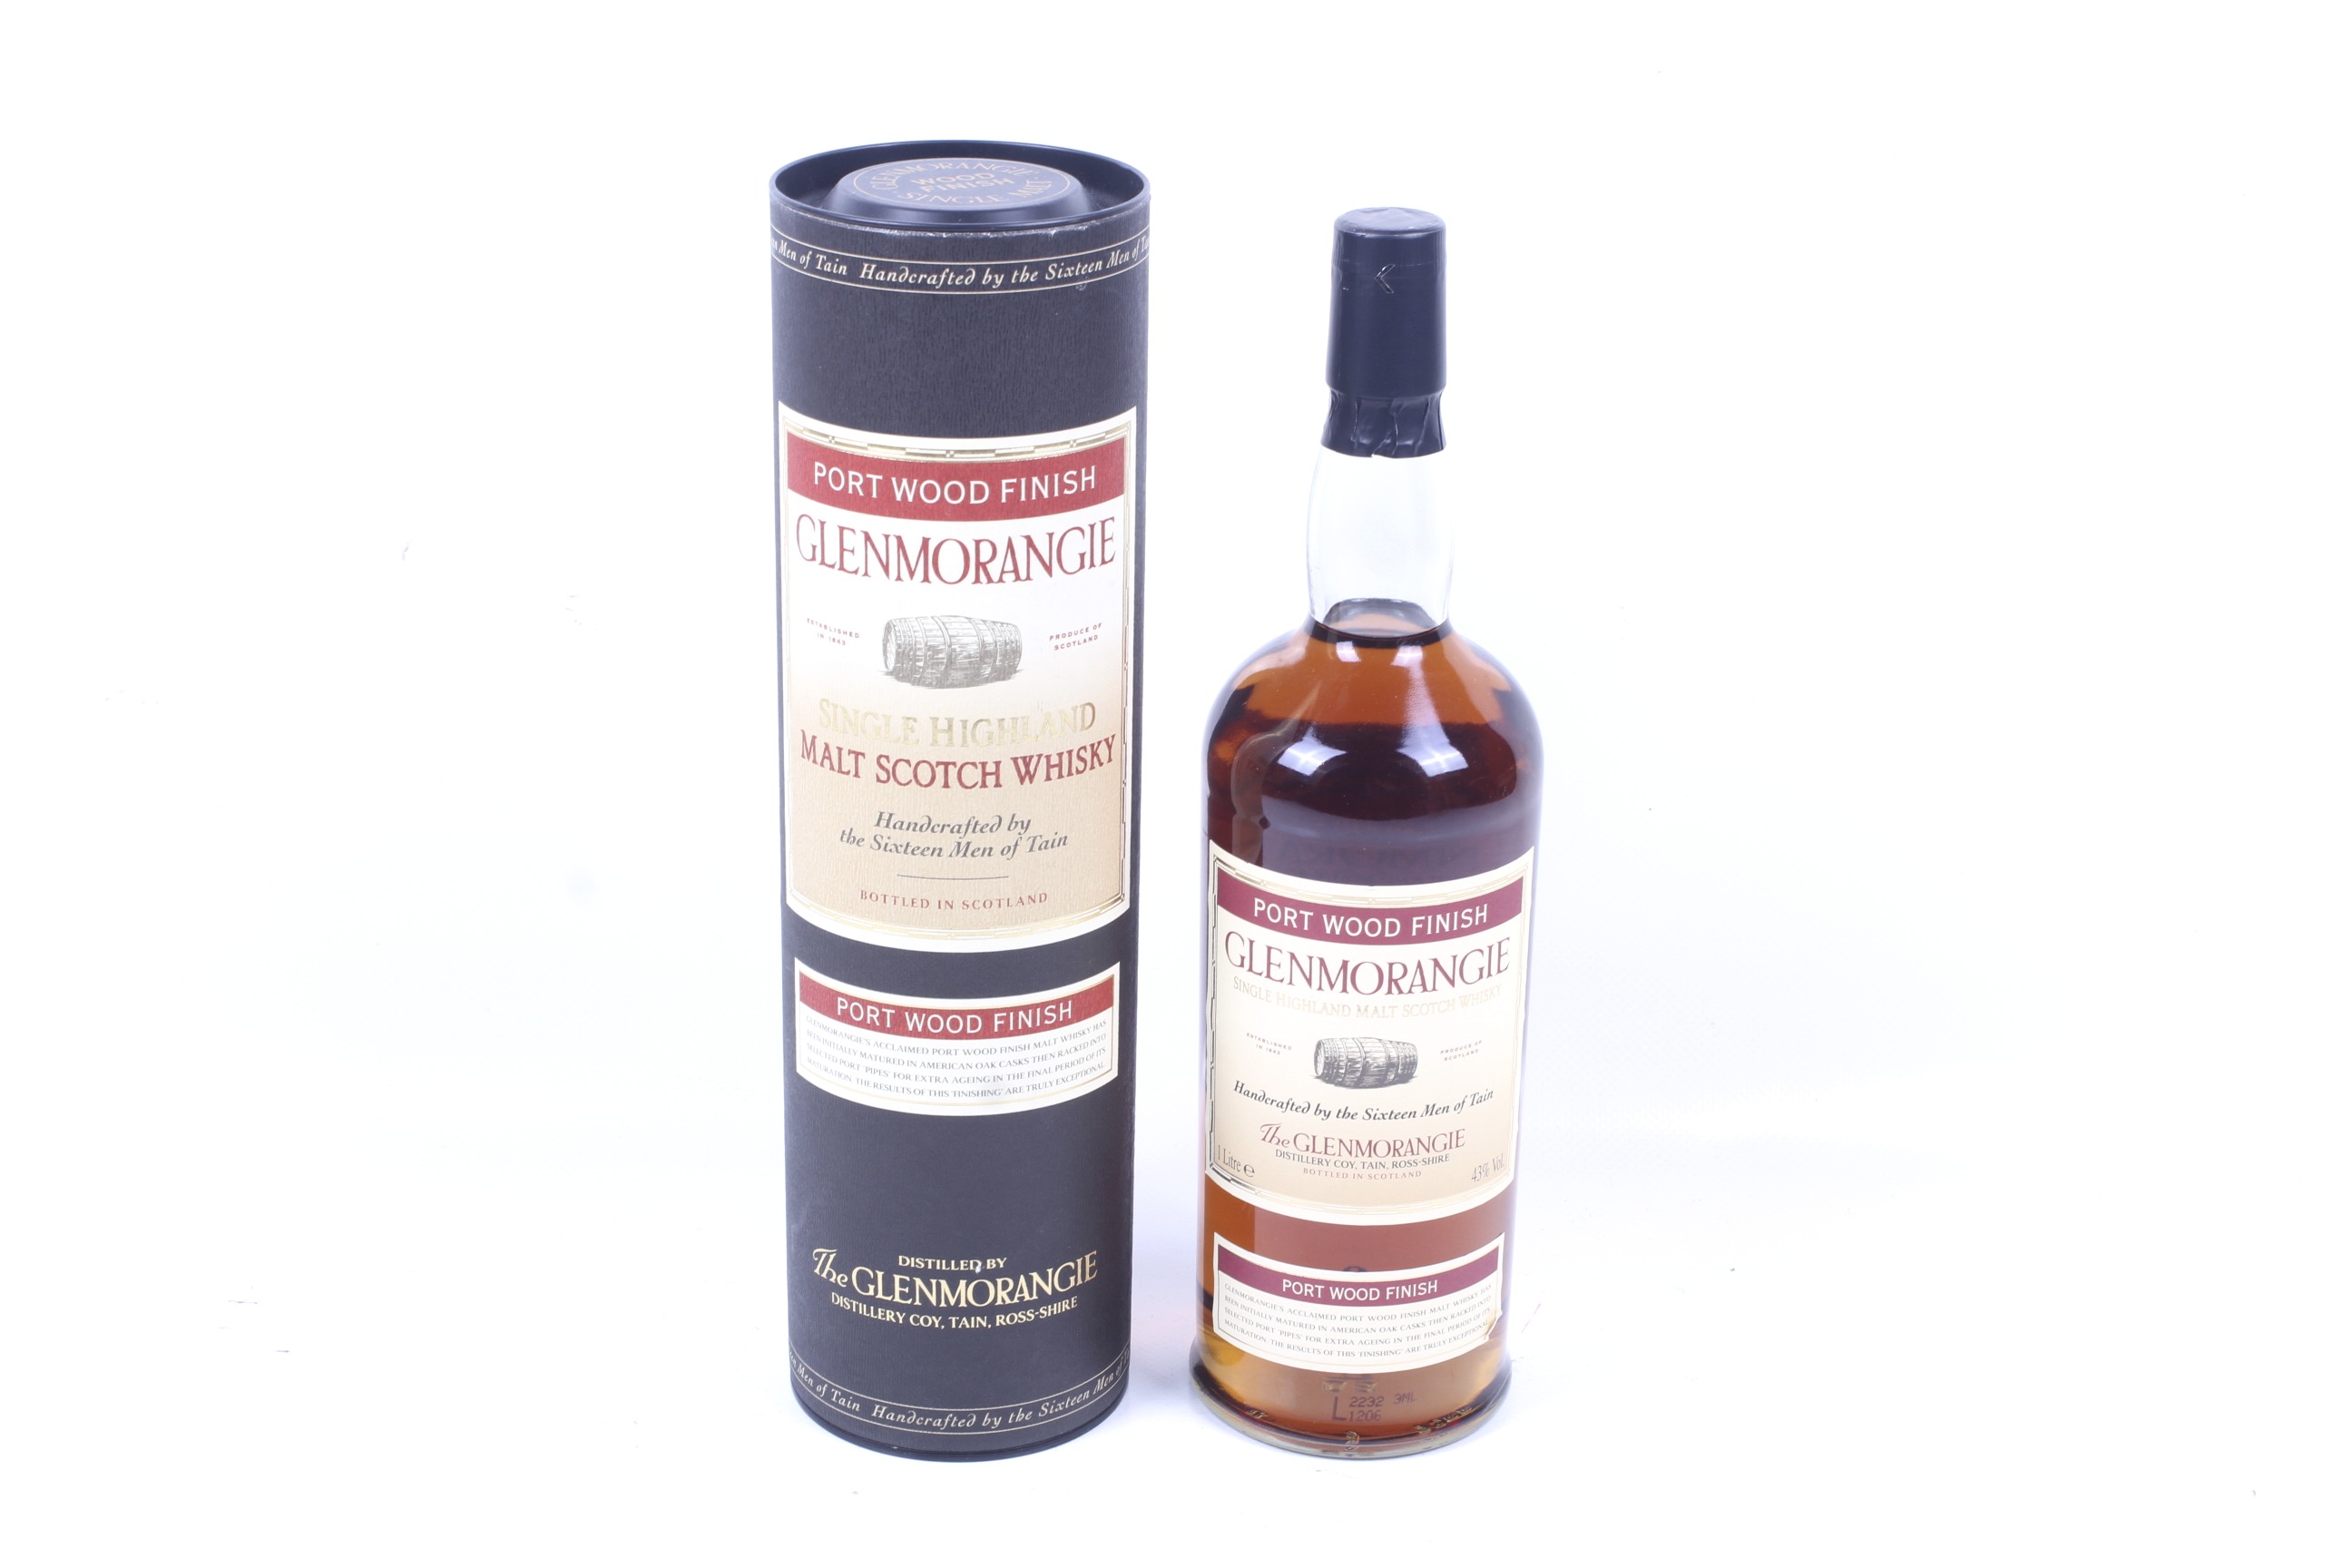 A bottle of Glenmorangie single highland malt whisky. With port wood finish, 1l, 43% vol, boxed.